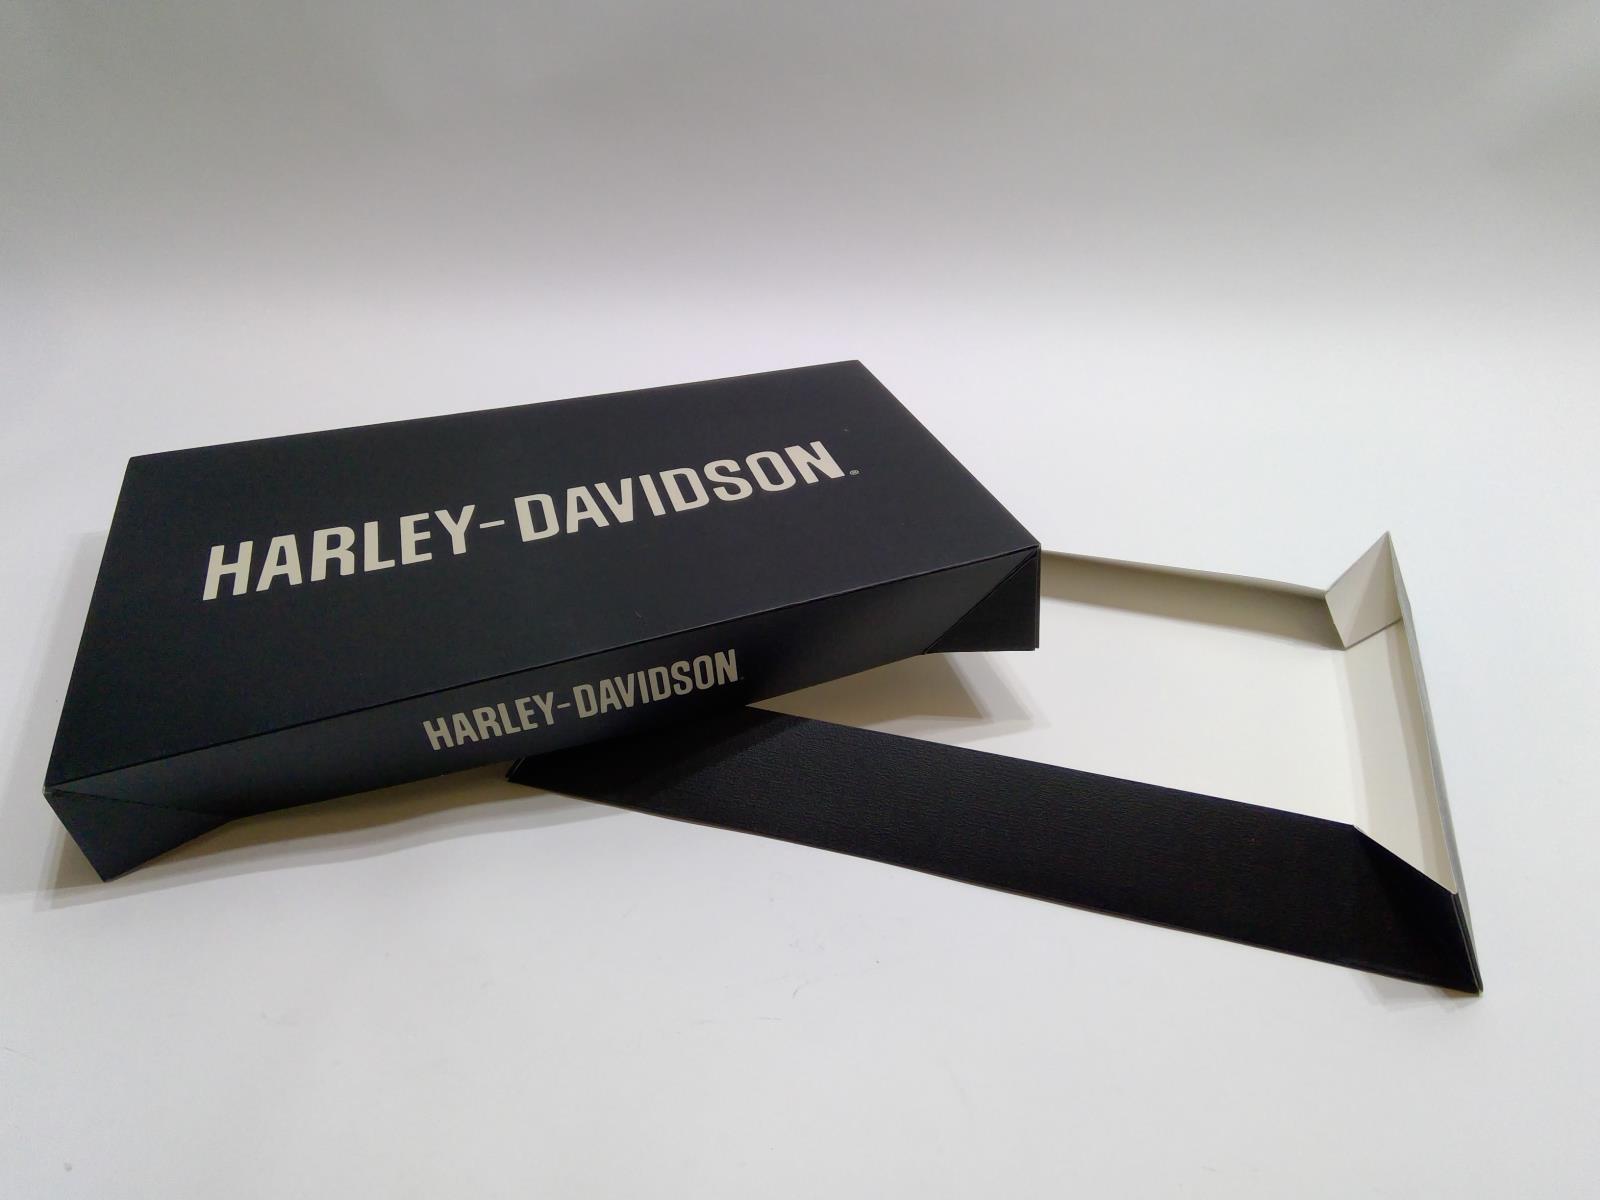 NEW Harley-Davidson Large 15x9.5x2 Black Gift Box 38pk 99611-13V